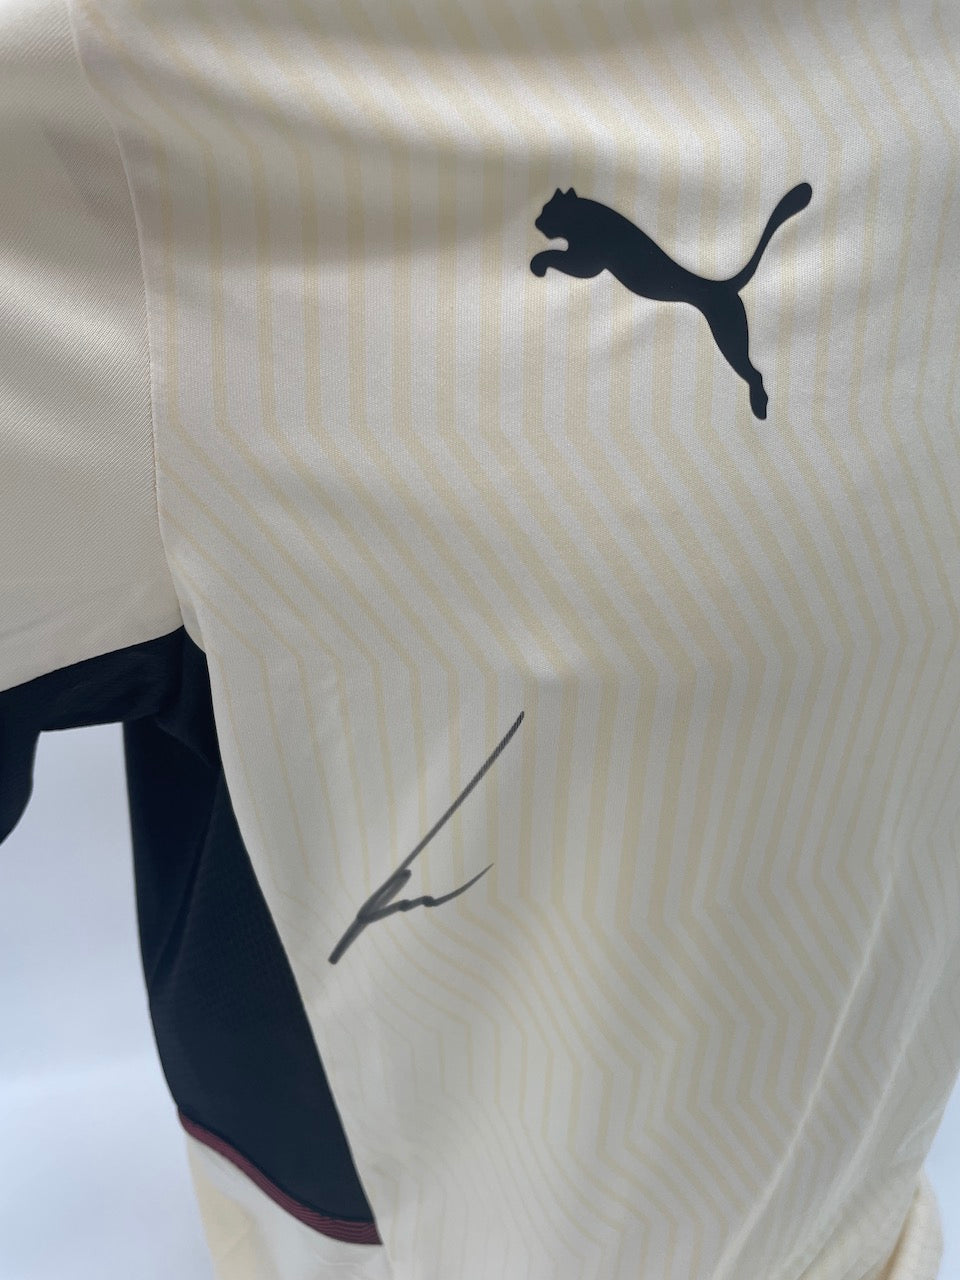 AC Mailand Trainingsshirt Theo Hernandez signiert Italien Autogramm Fußball L